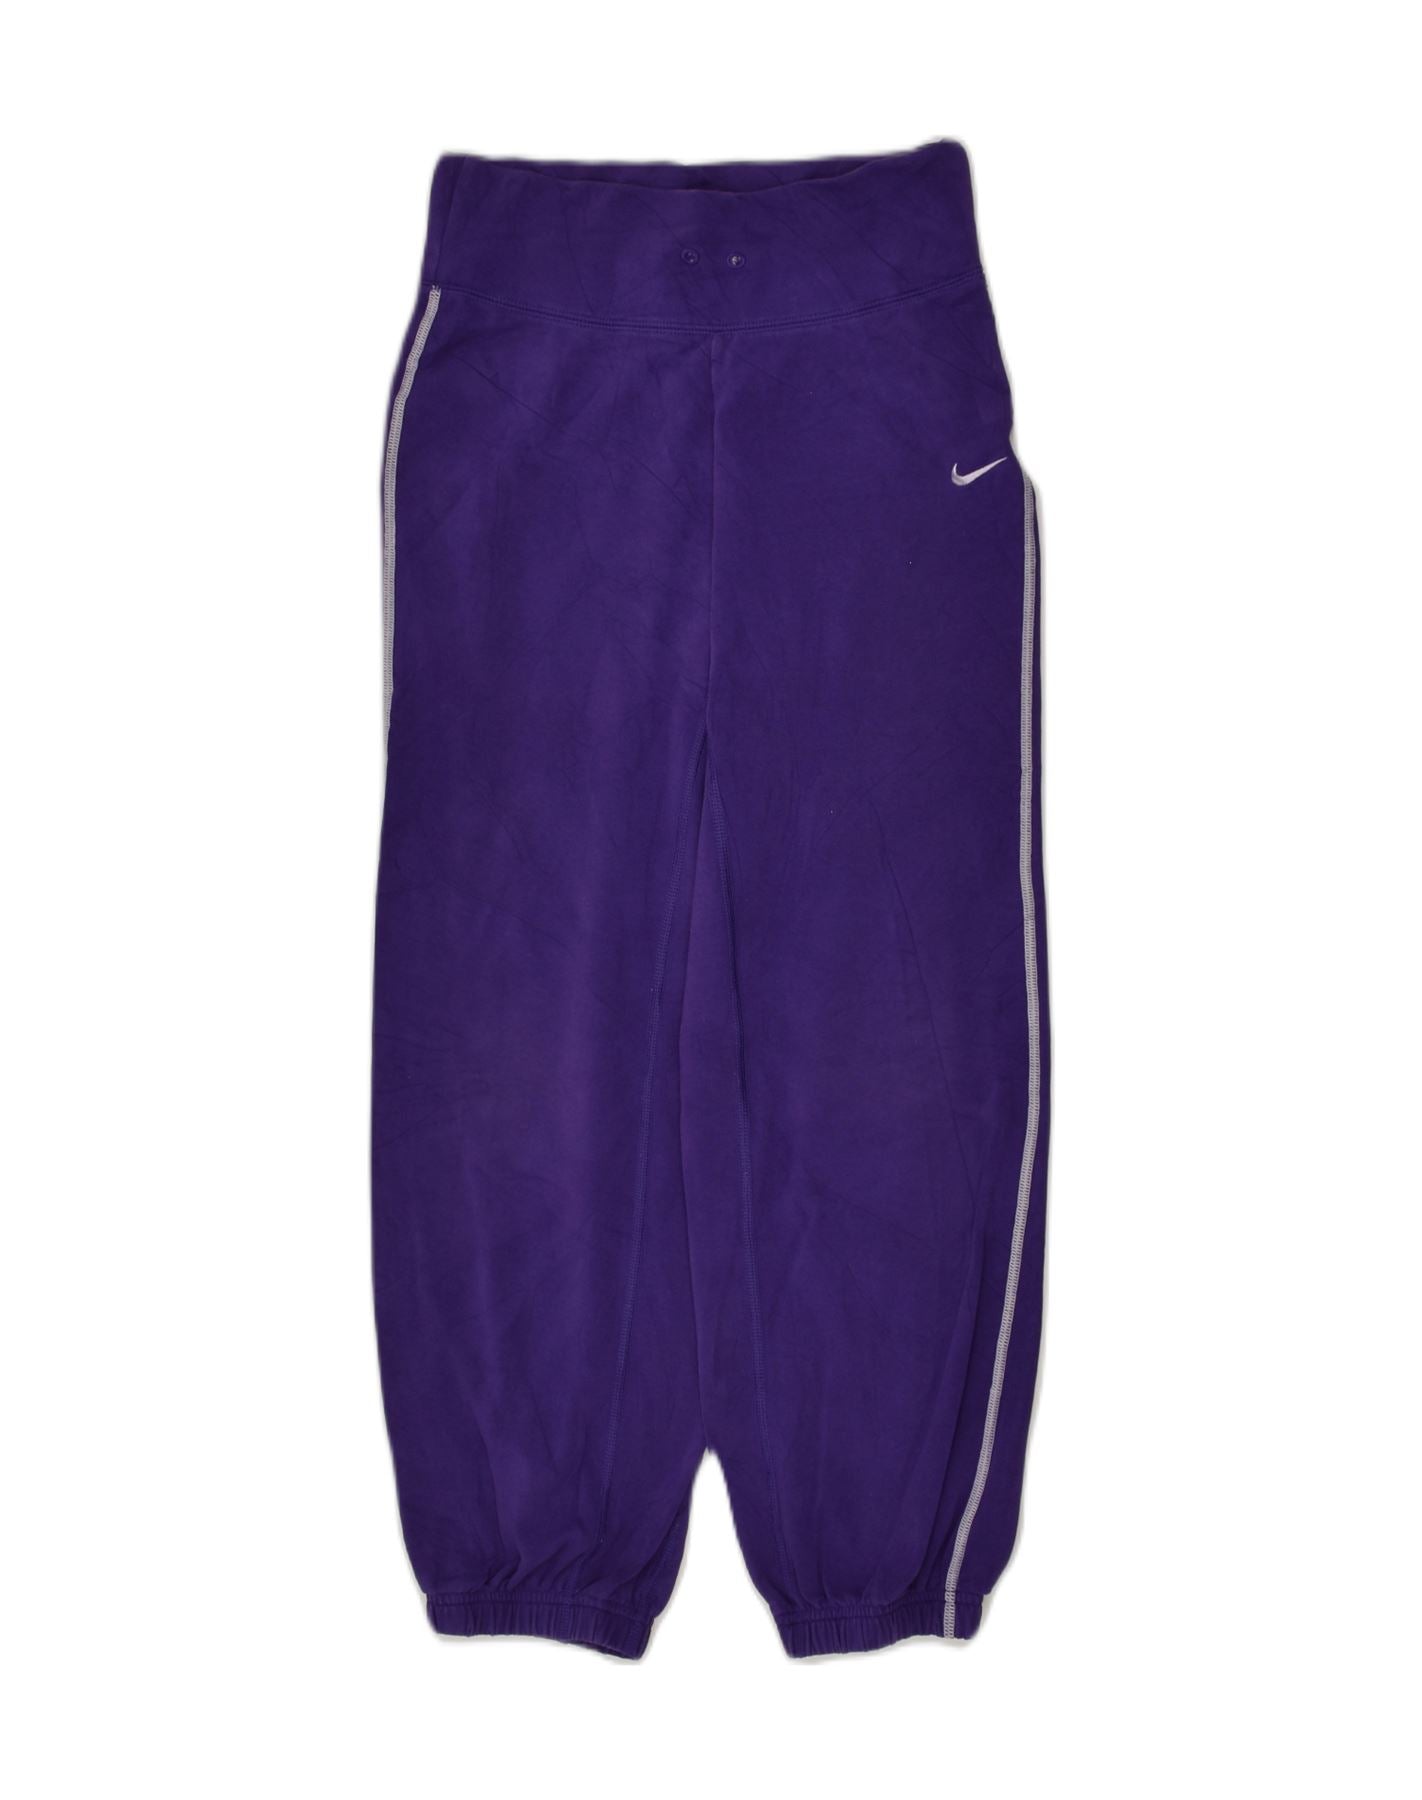 NIKE Womens Capri Tracksuit Trousers Joggers UK 12 Medium Purple